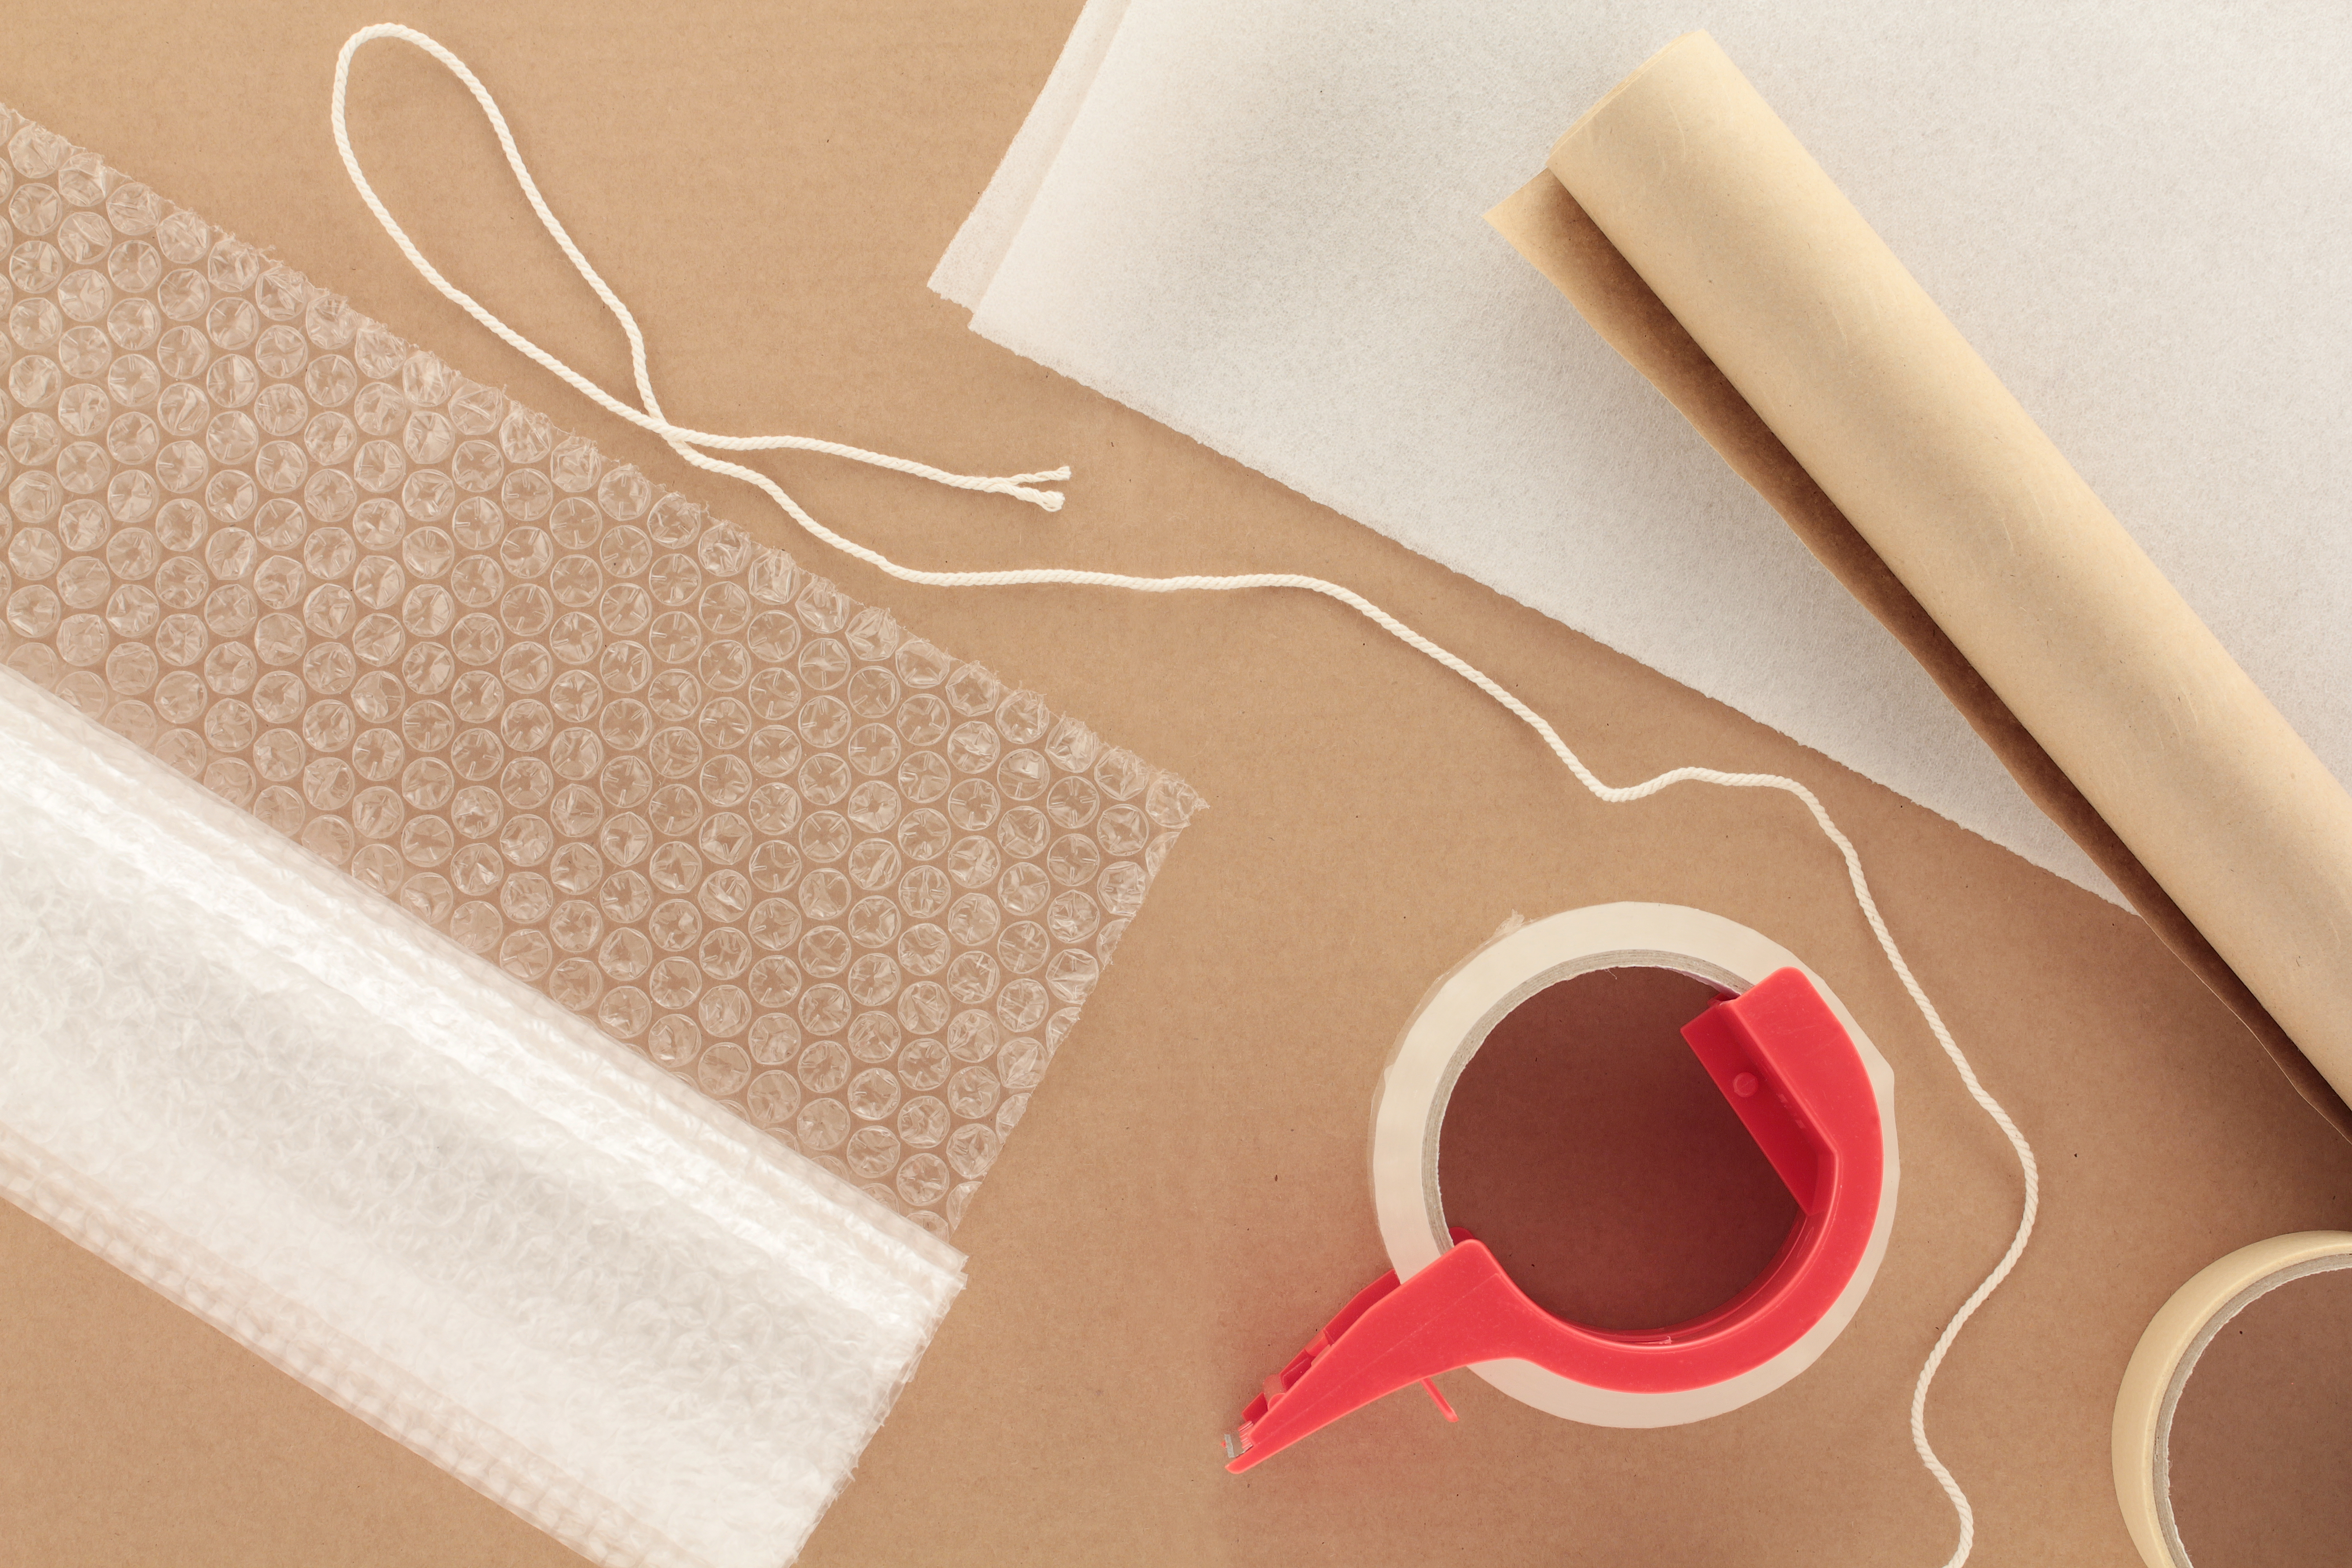 Packaging materials. (Image: Shutterstock)